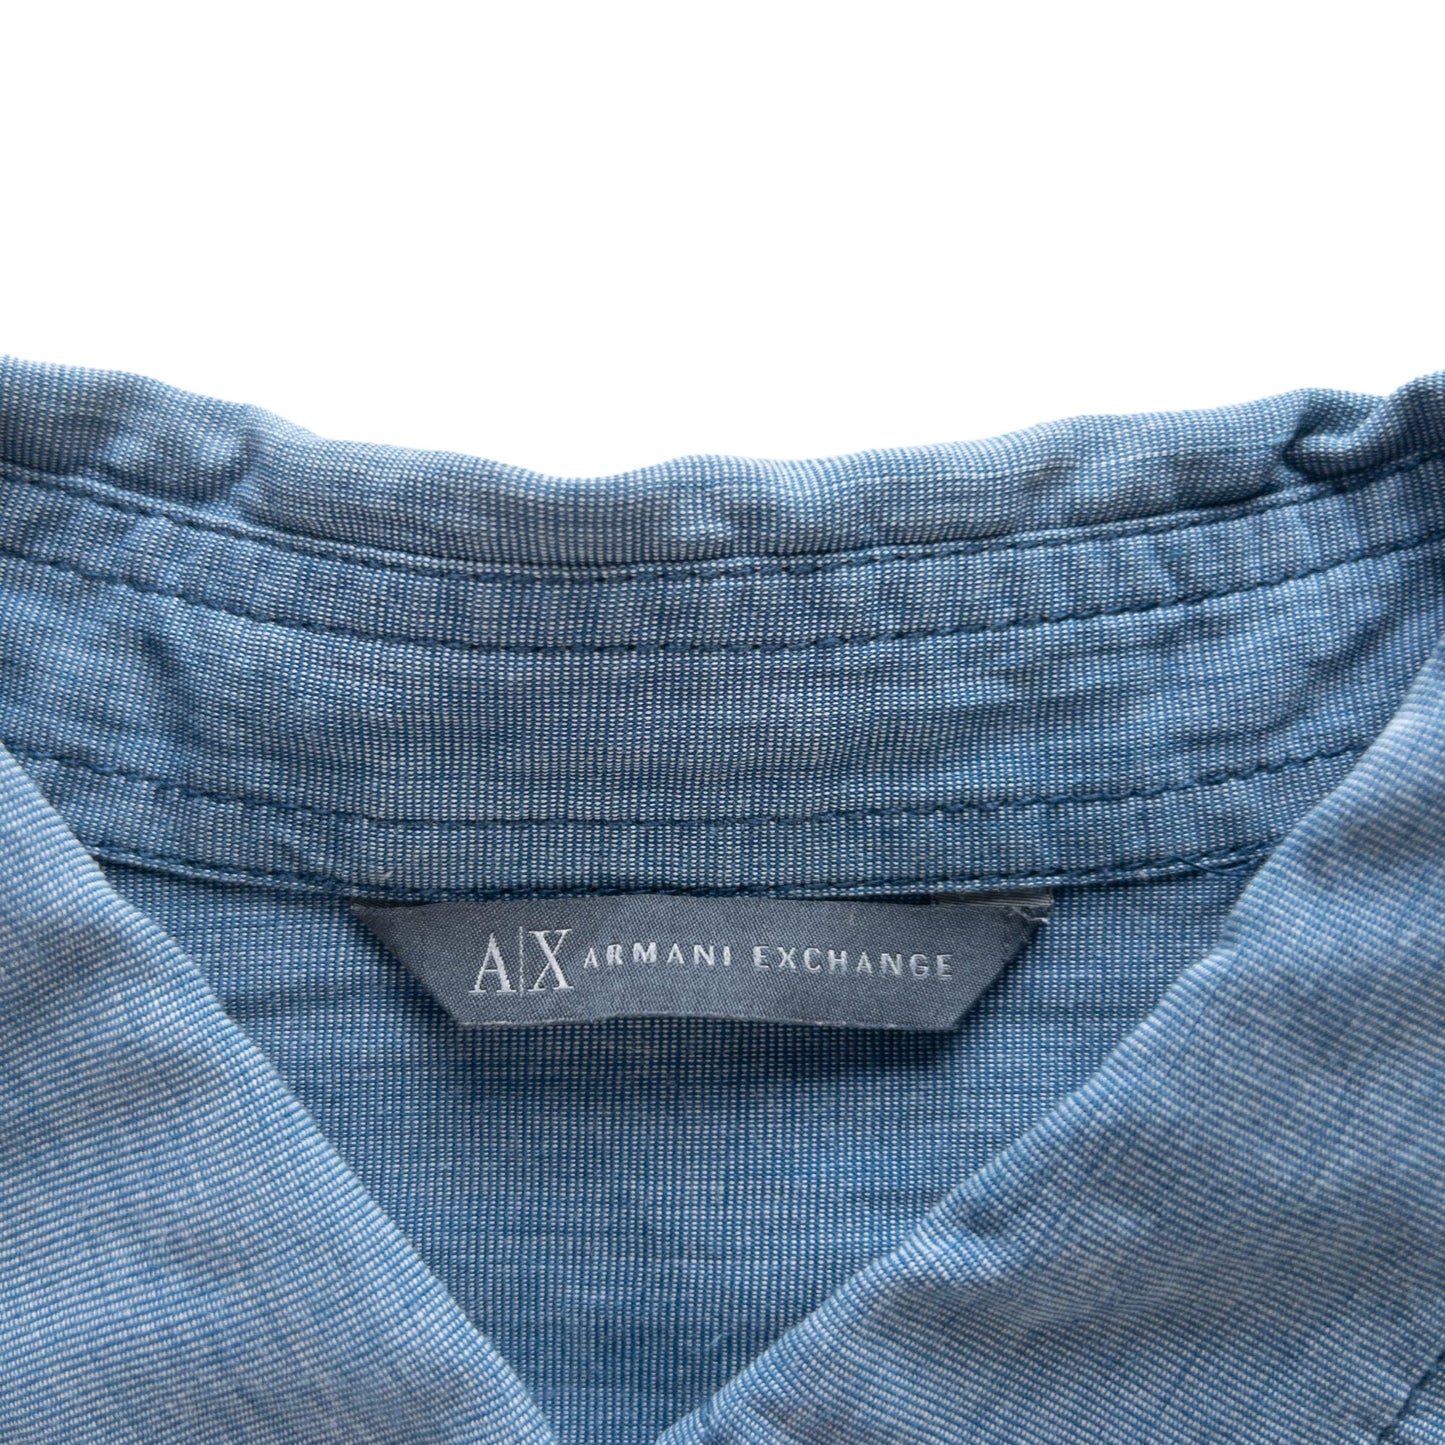 Vintage Armani Multi Pocket Short Sleeve Shirt Size S